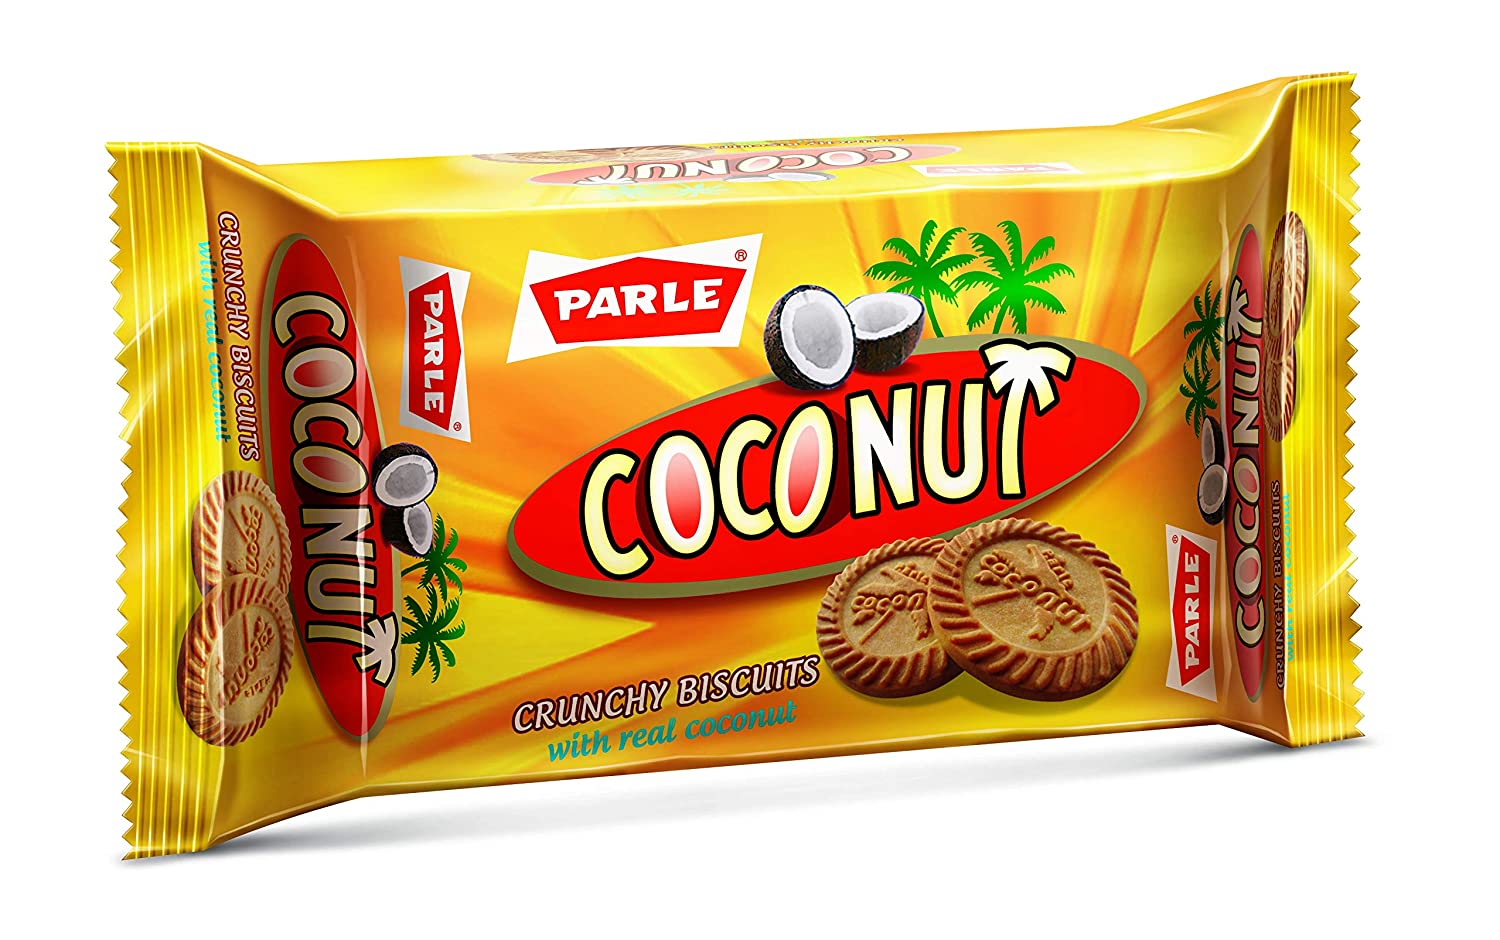 Parle coconut